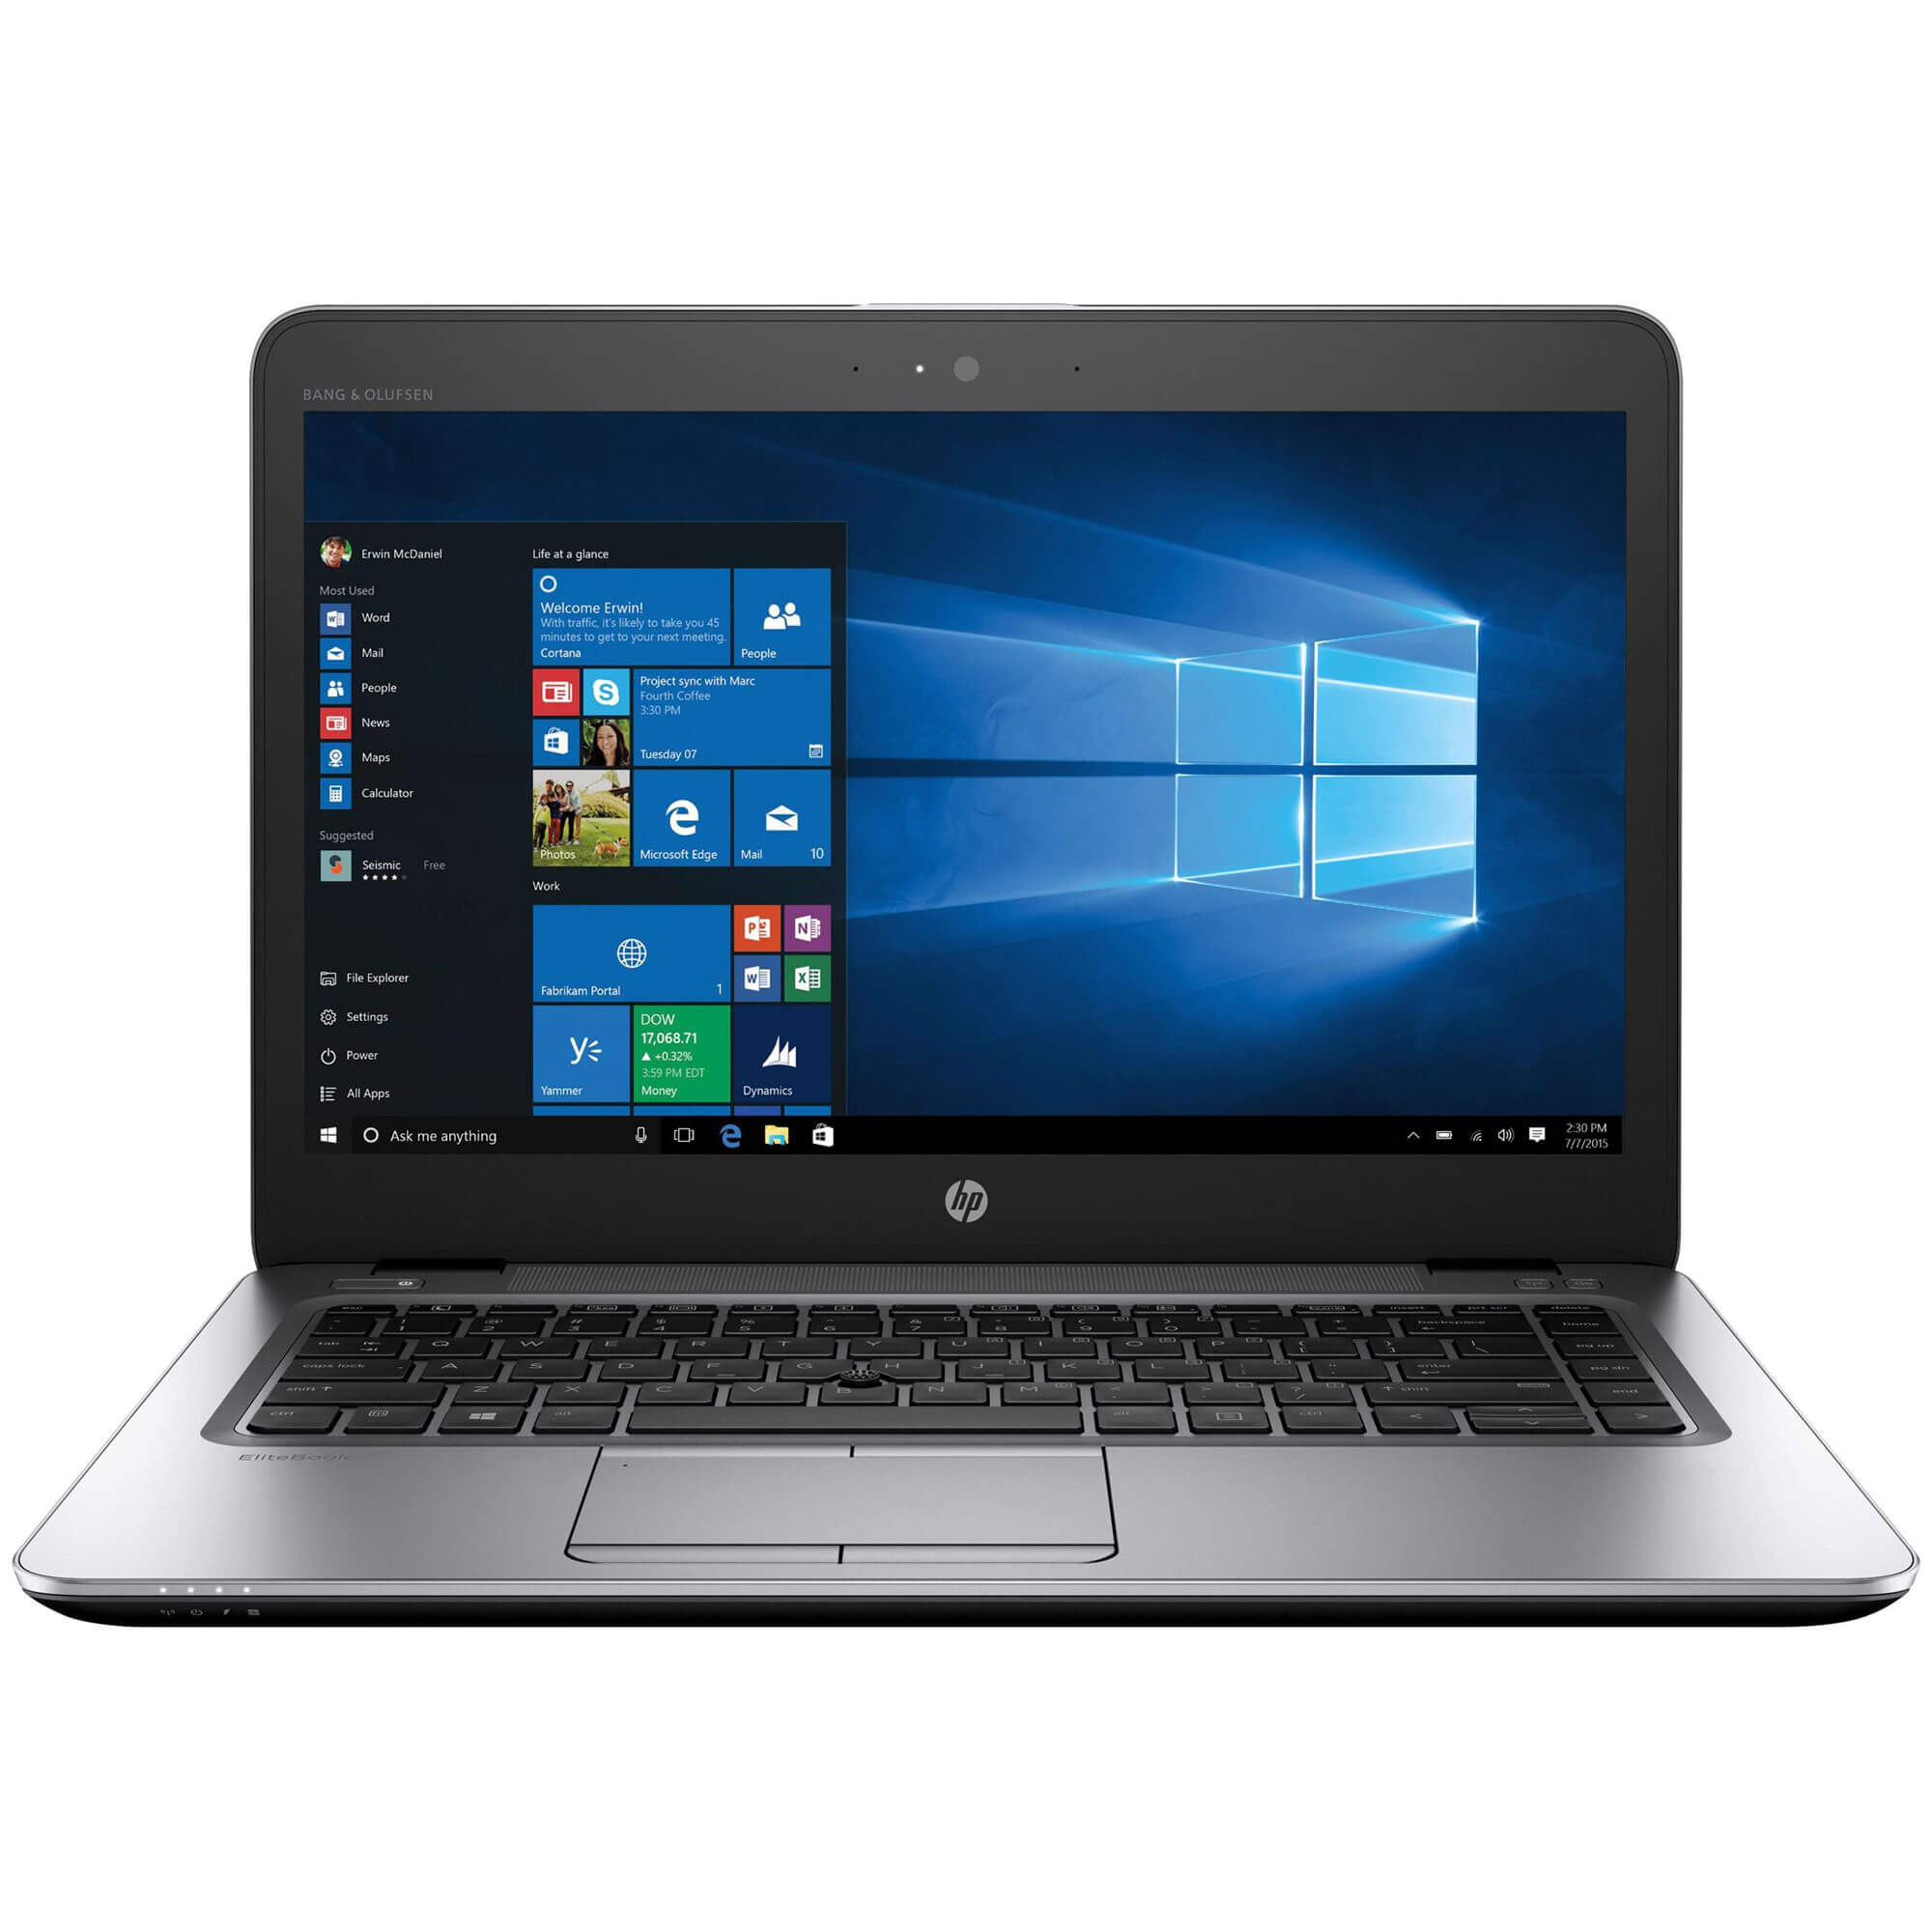 HP EliteBook 840 G4 Laptop Computer: 14" FHD Touchscreen Display, Intel Core i5 (7th Gen), Windows 10 Pro, Webcam